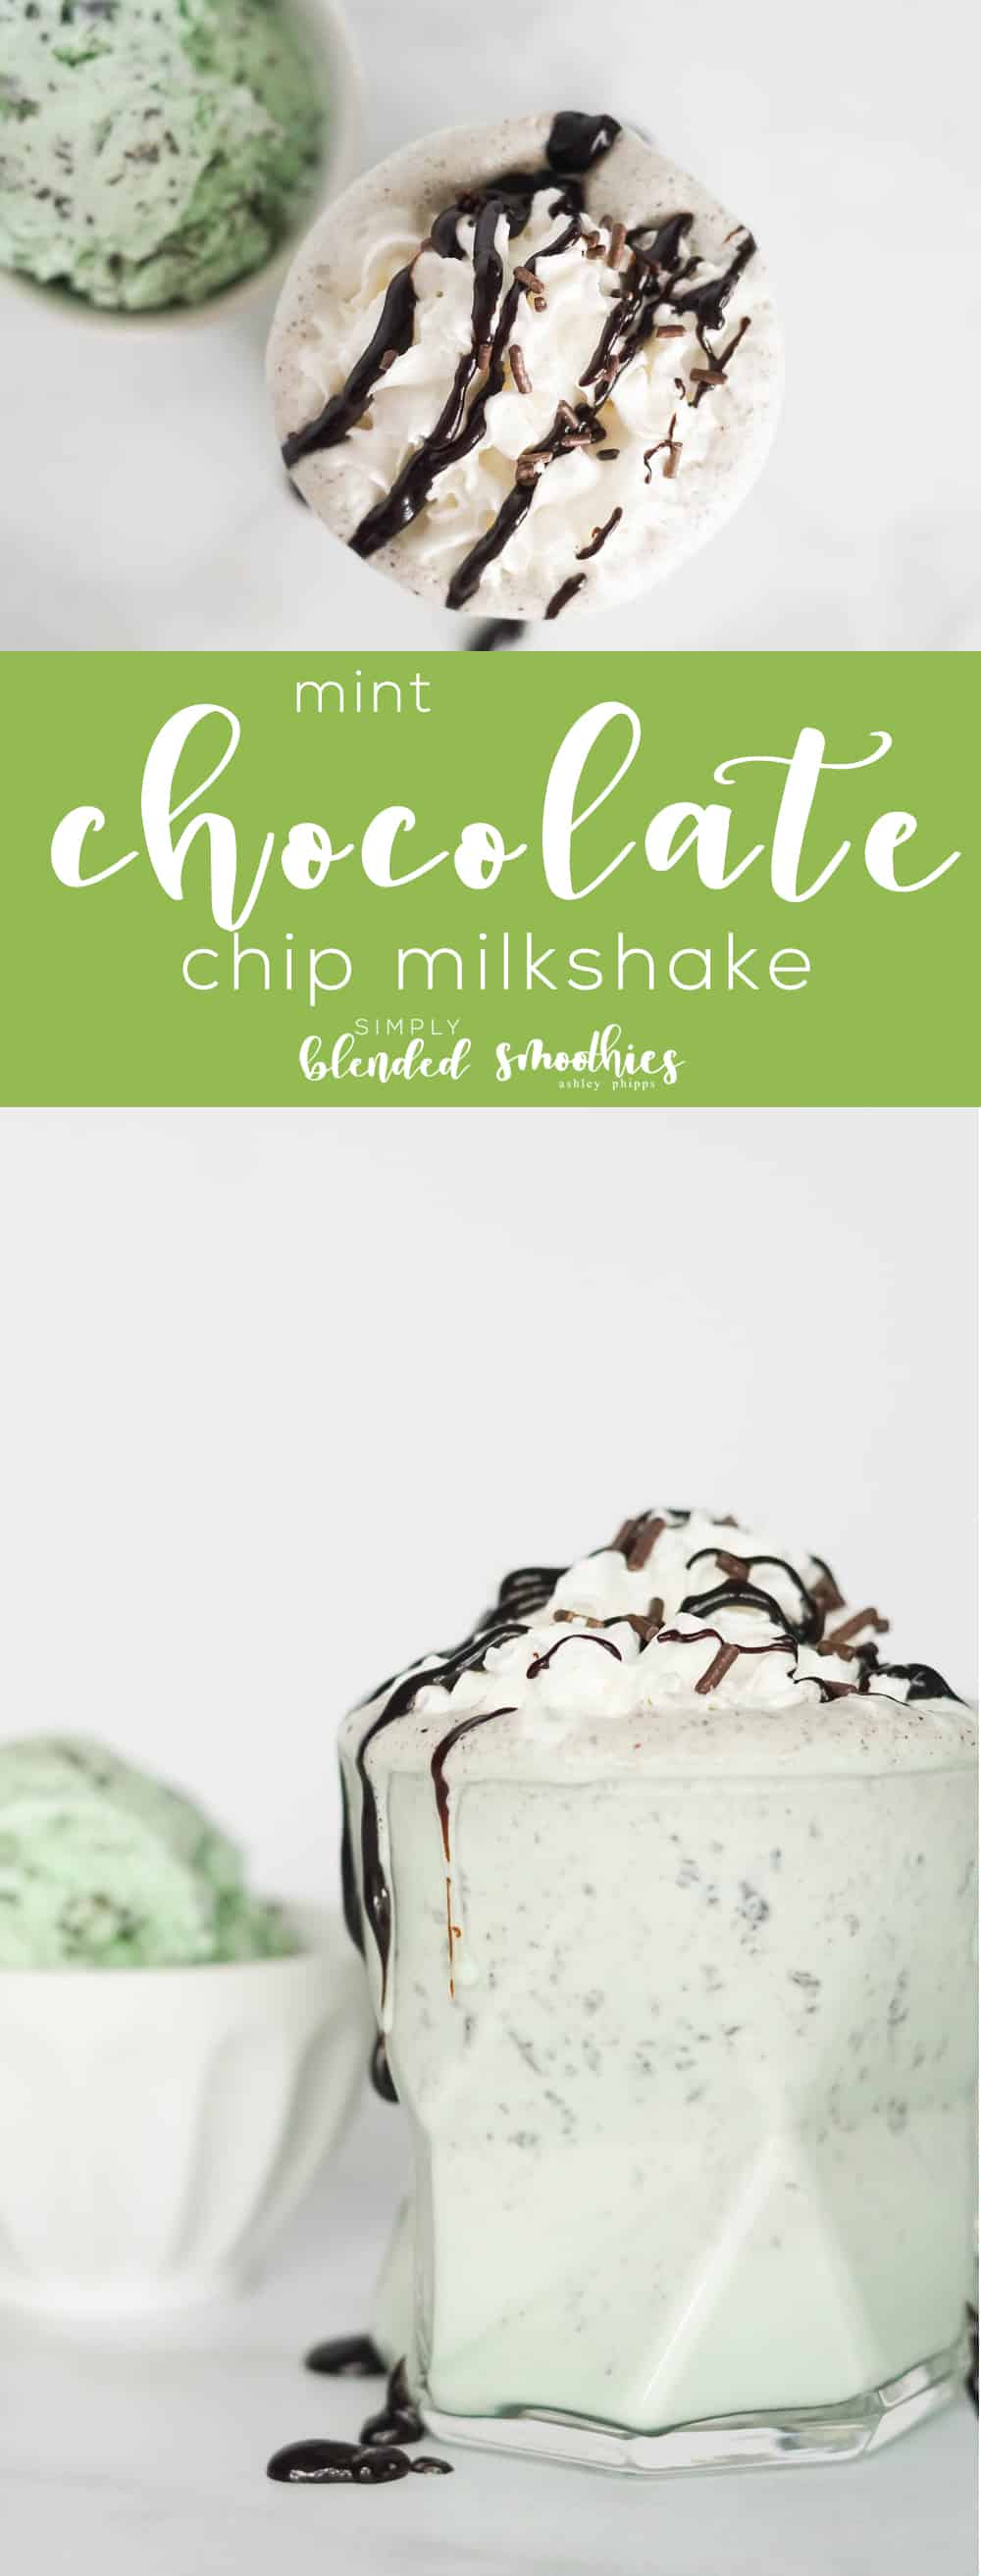 Mint Chocolate Chip Milkshake - The Yummiest Shake Ever - So Much Better Than A Shamrock Shake